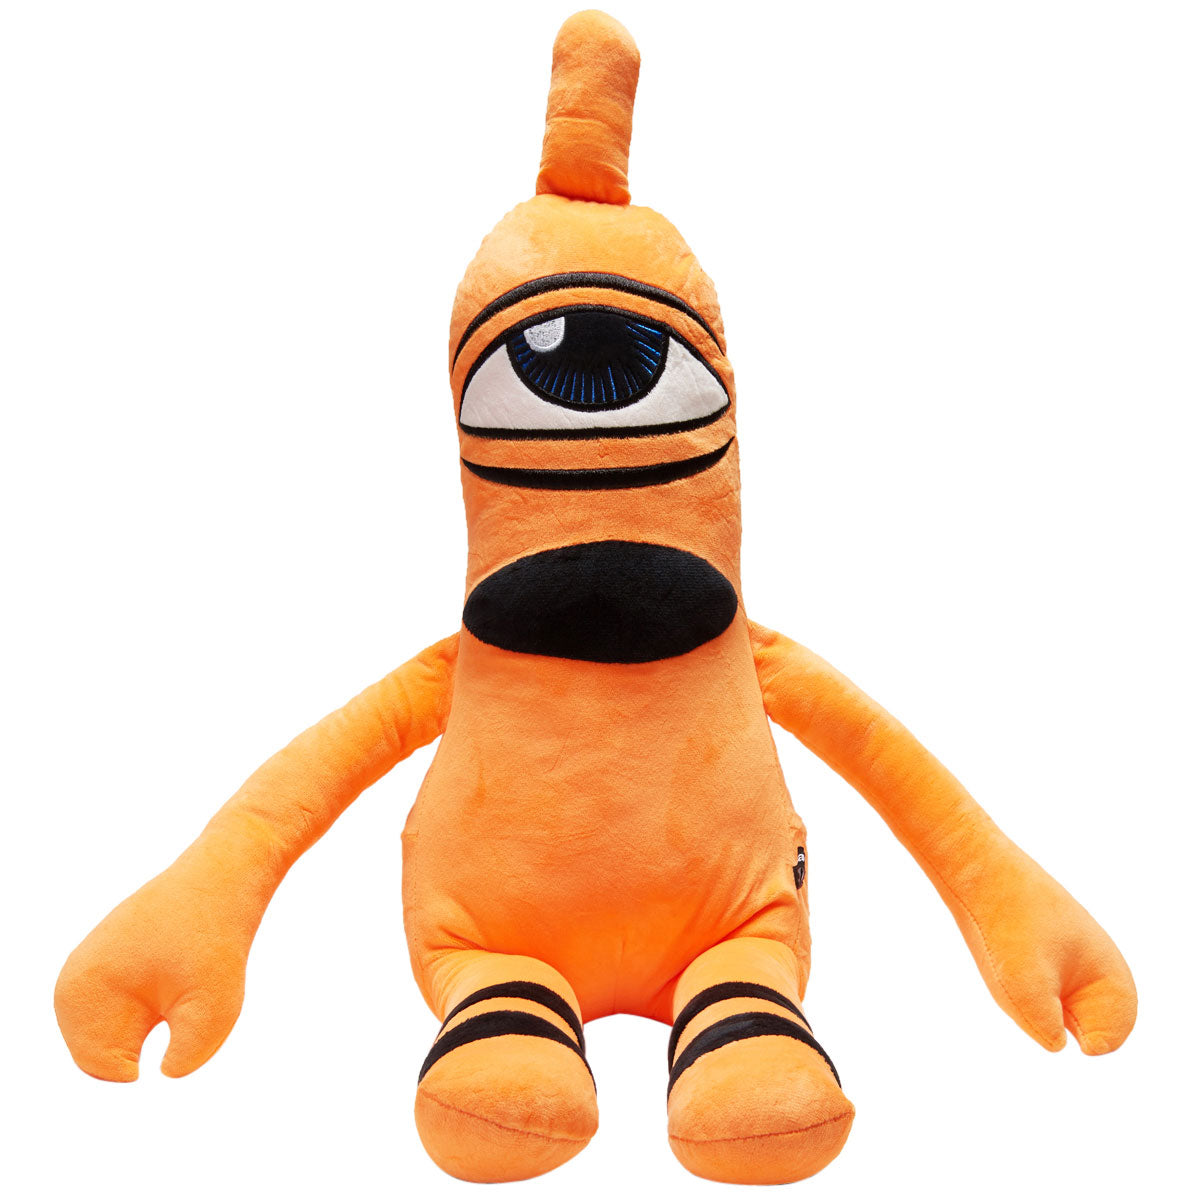 Toy Machine Sect Doll - Orange image 1